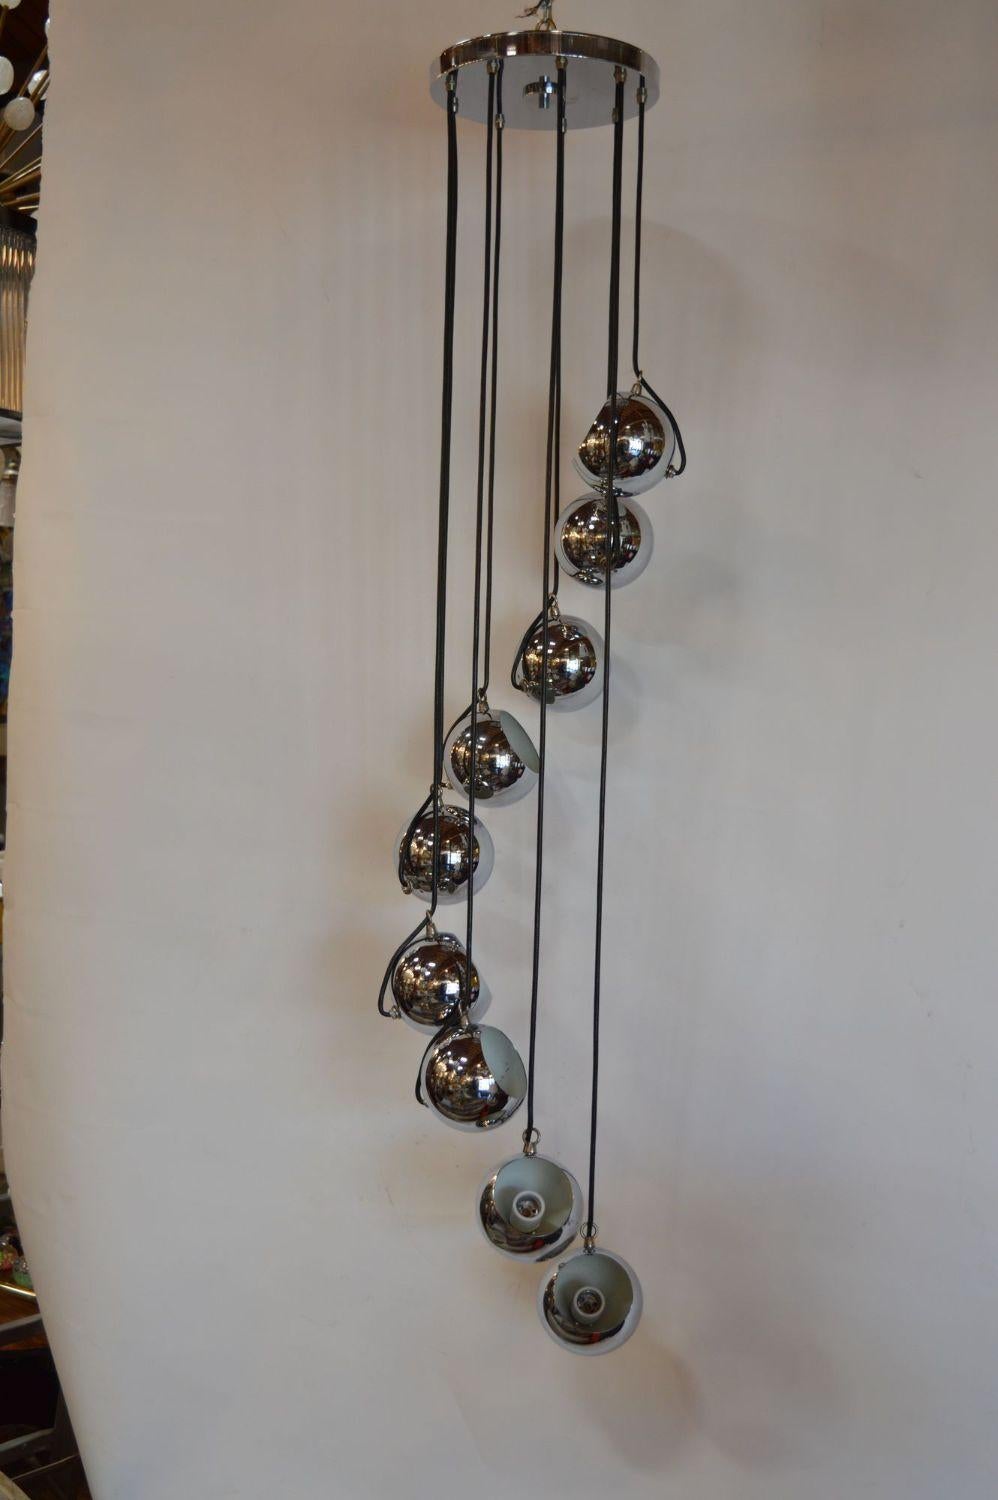 Italian midcentury Chrome Cascading style chandelier by Gino Sarfatti for Lightolier.